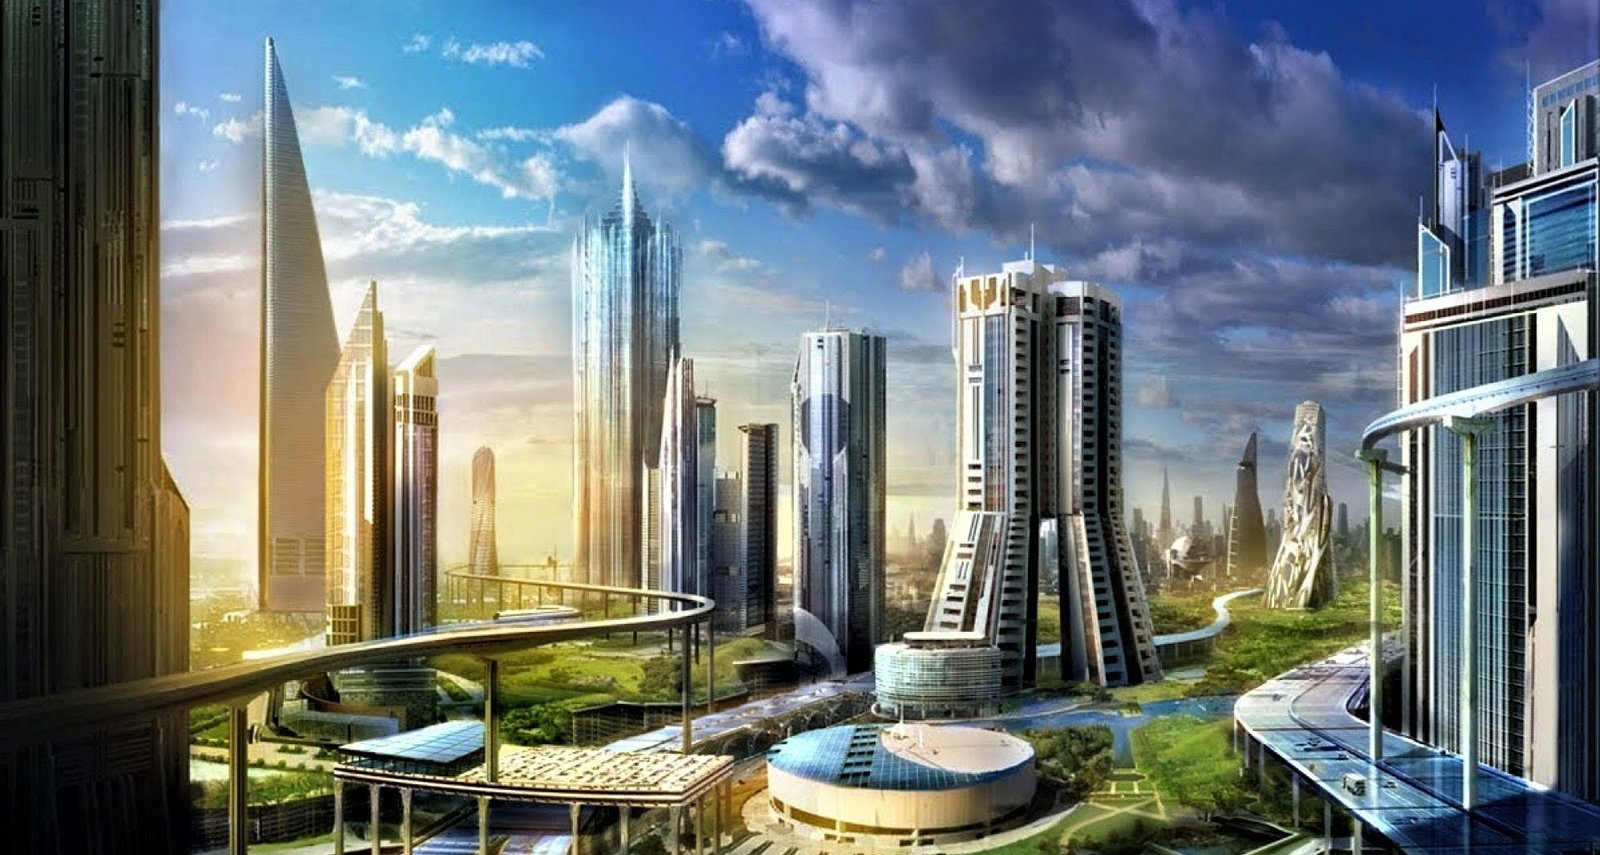 The Story Behind Saudi Arabia’s $500 Billion “City of the Future”, Neom